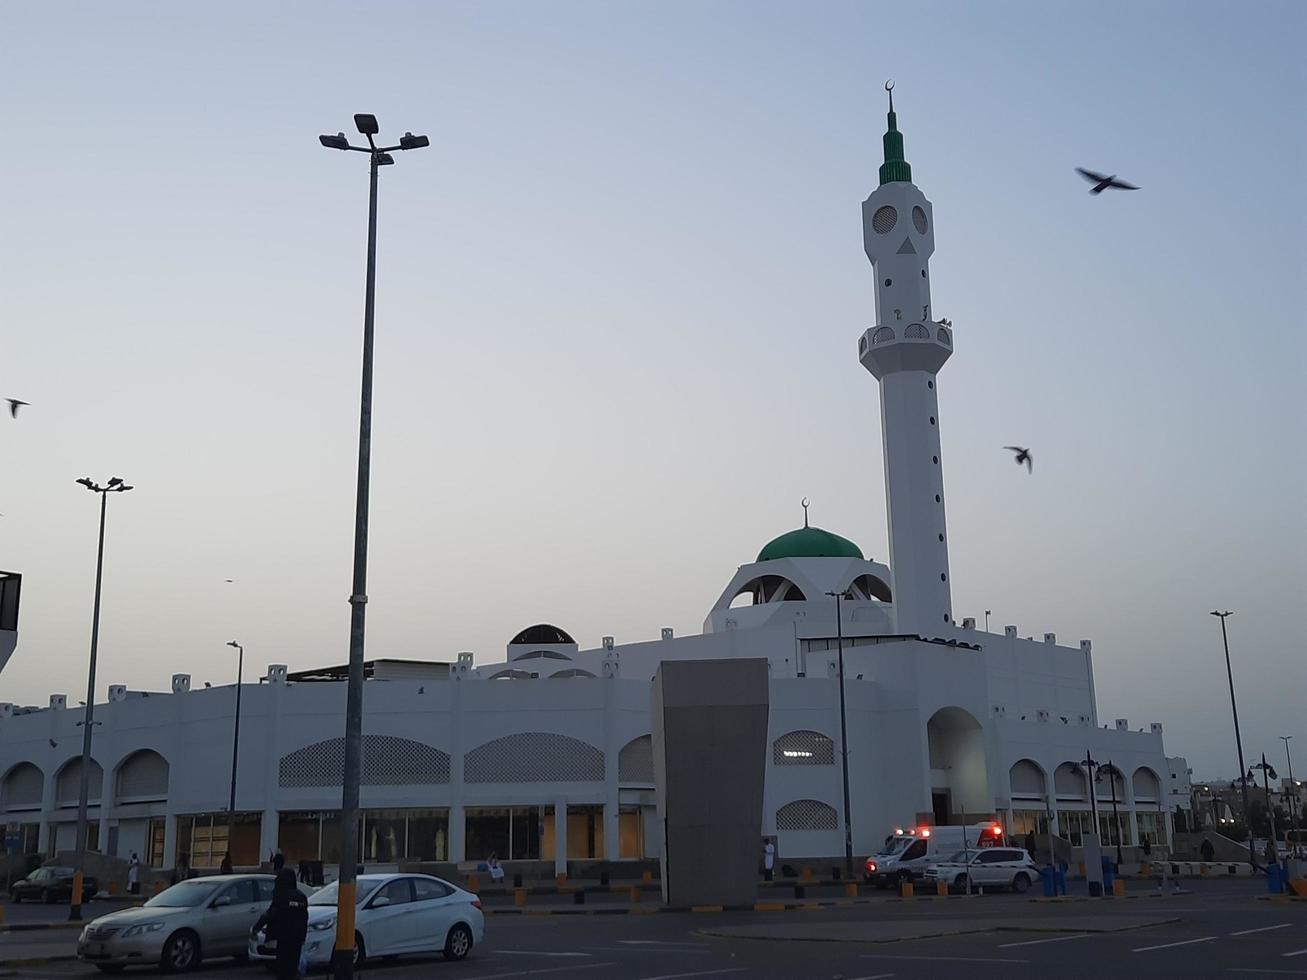 medina, arabia saudita, diciembre de 2022 - hermosa vista de la mezquita bilal en medina, arabia saudita. la mezquita bilal se encuentra a cierta distancia de masjid al-nabawi. foto